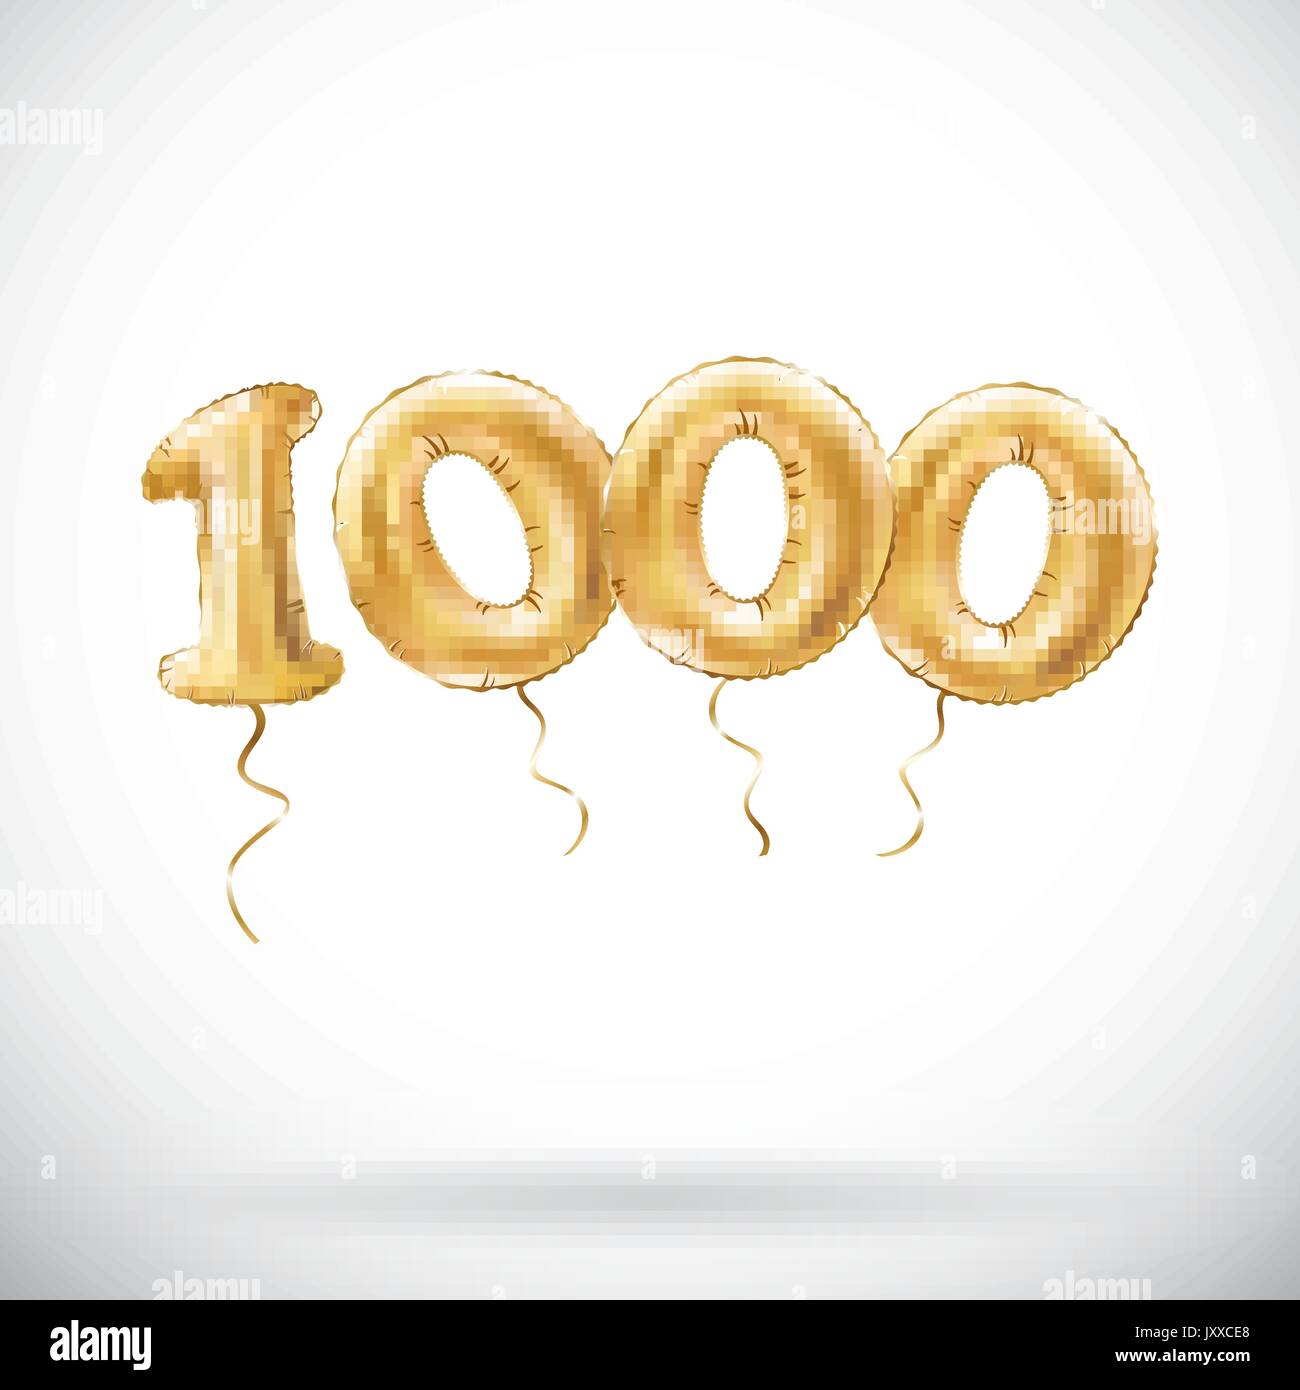 Vector Golden Number 1000 One Thousand Metallic Balloon Party